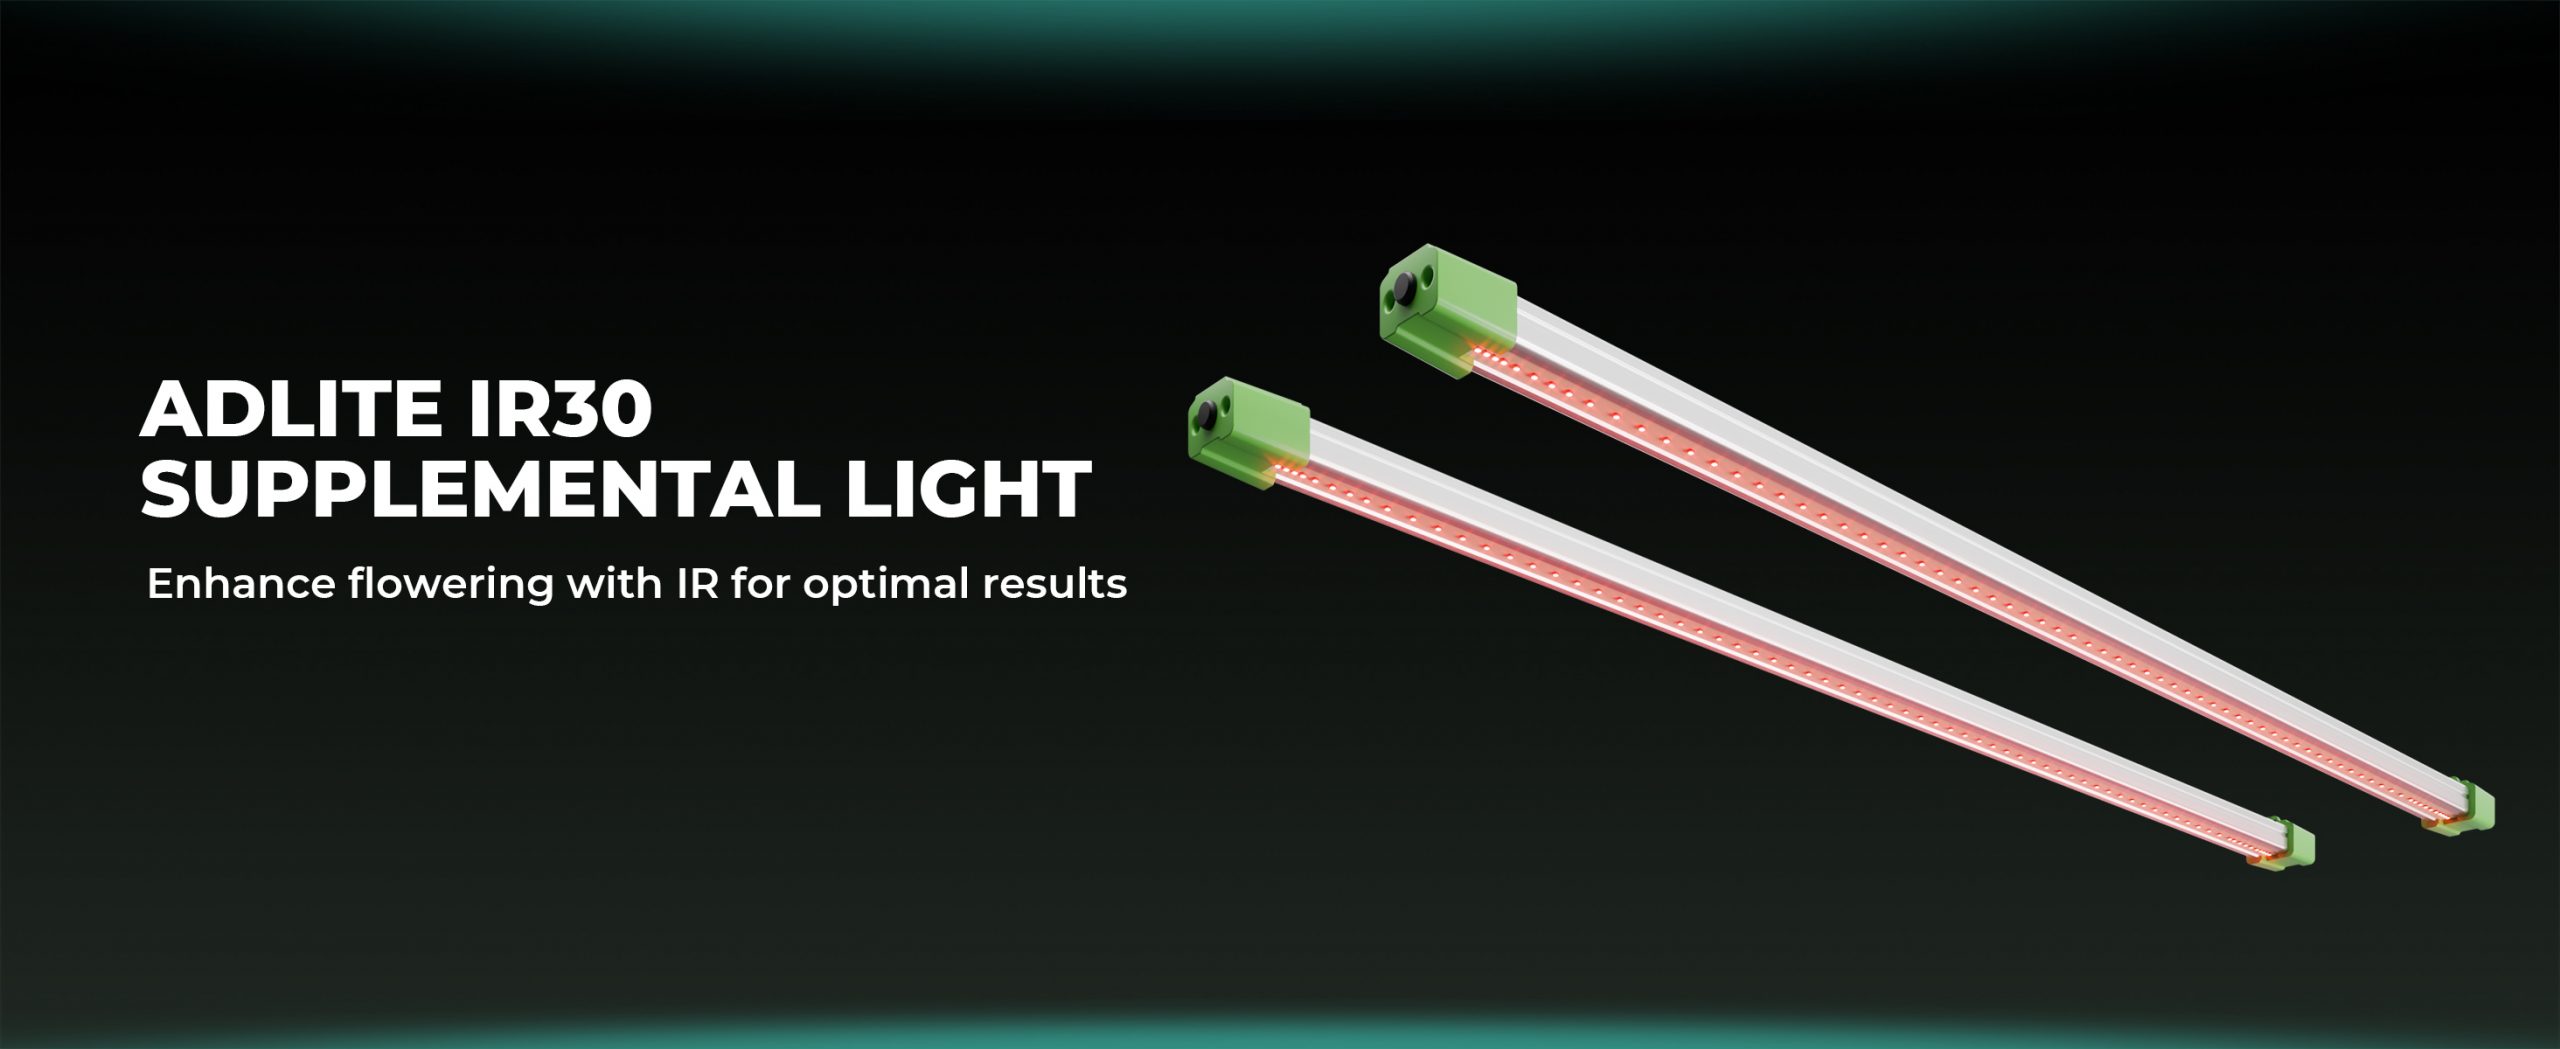 adlite ir30 supplemental led light